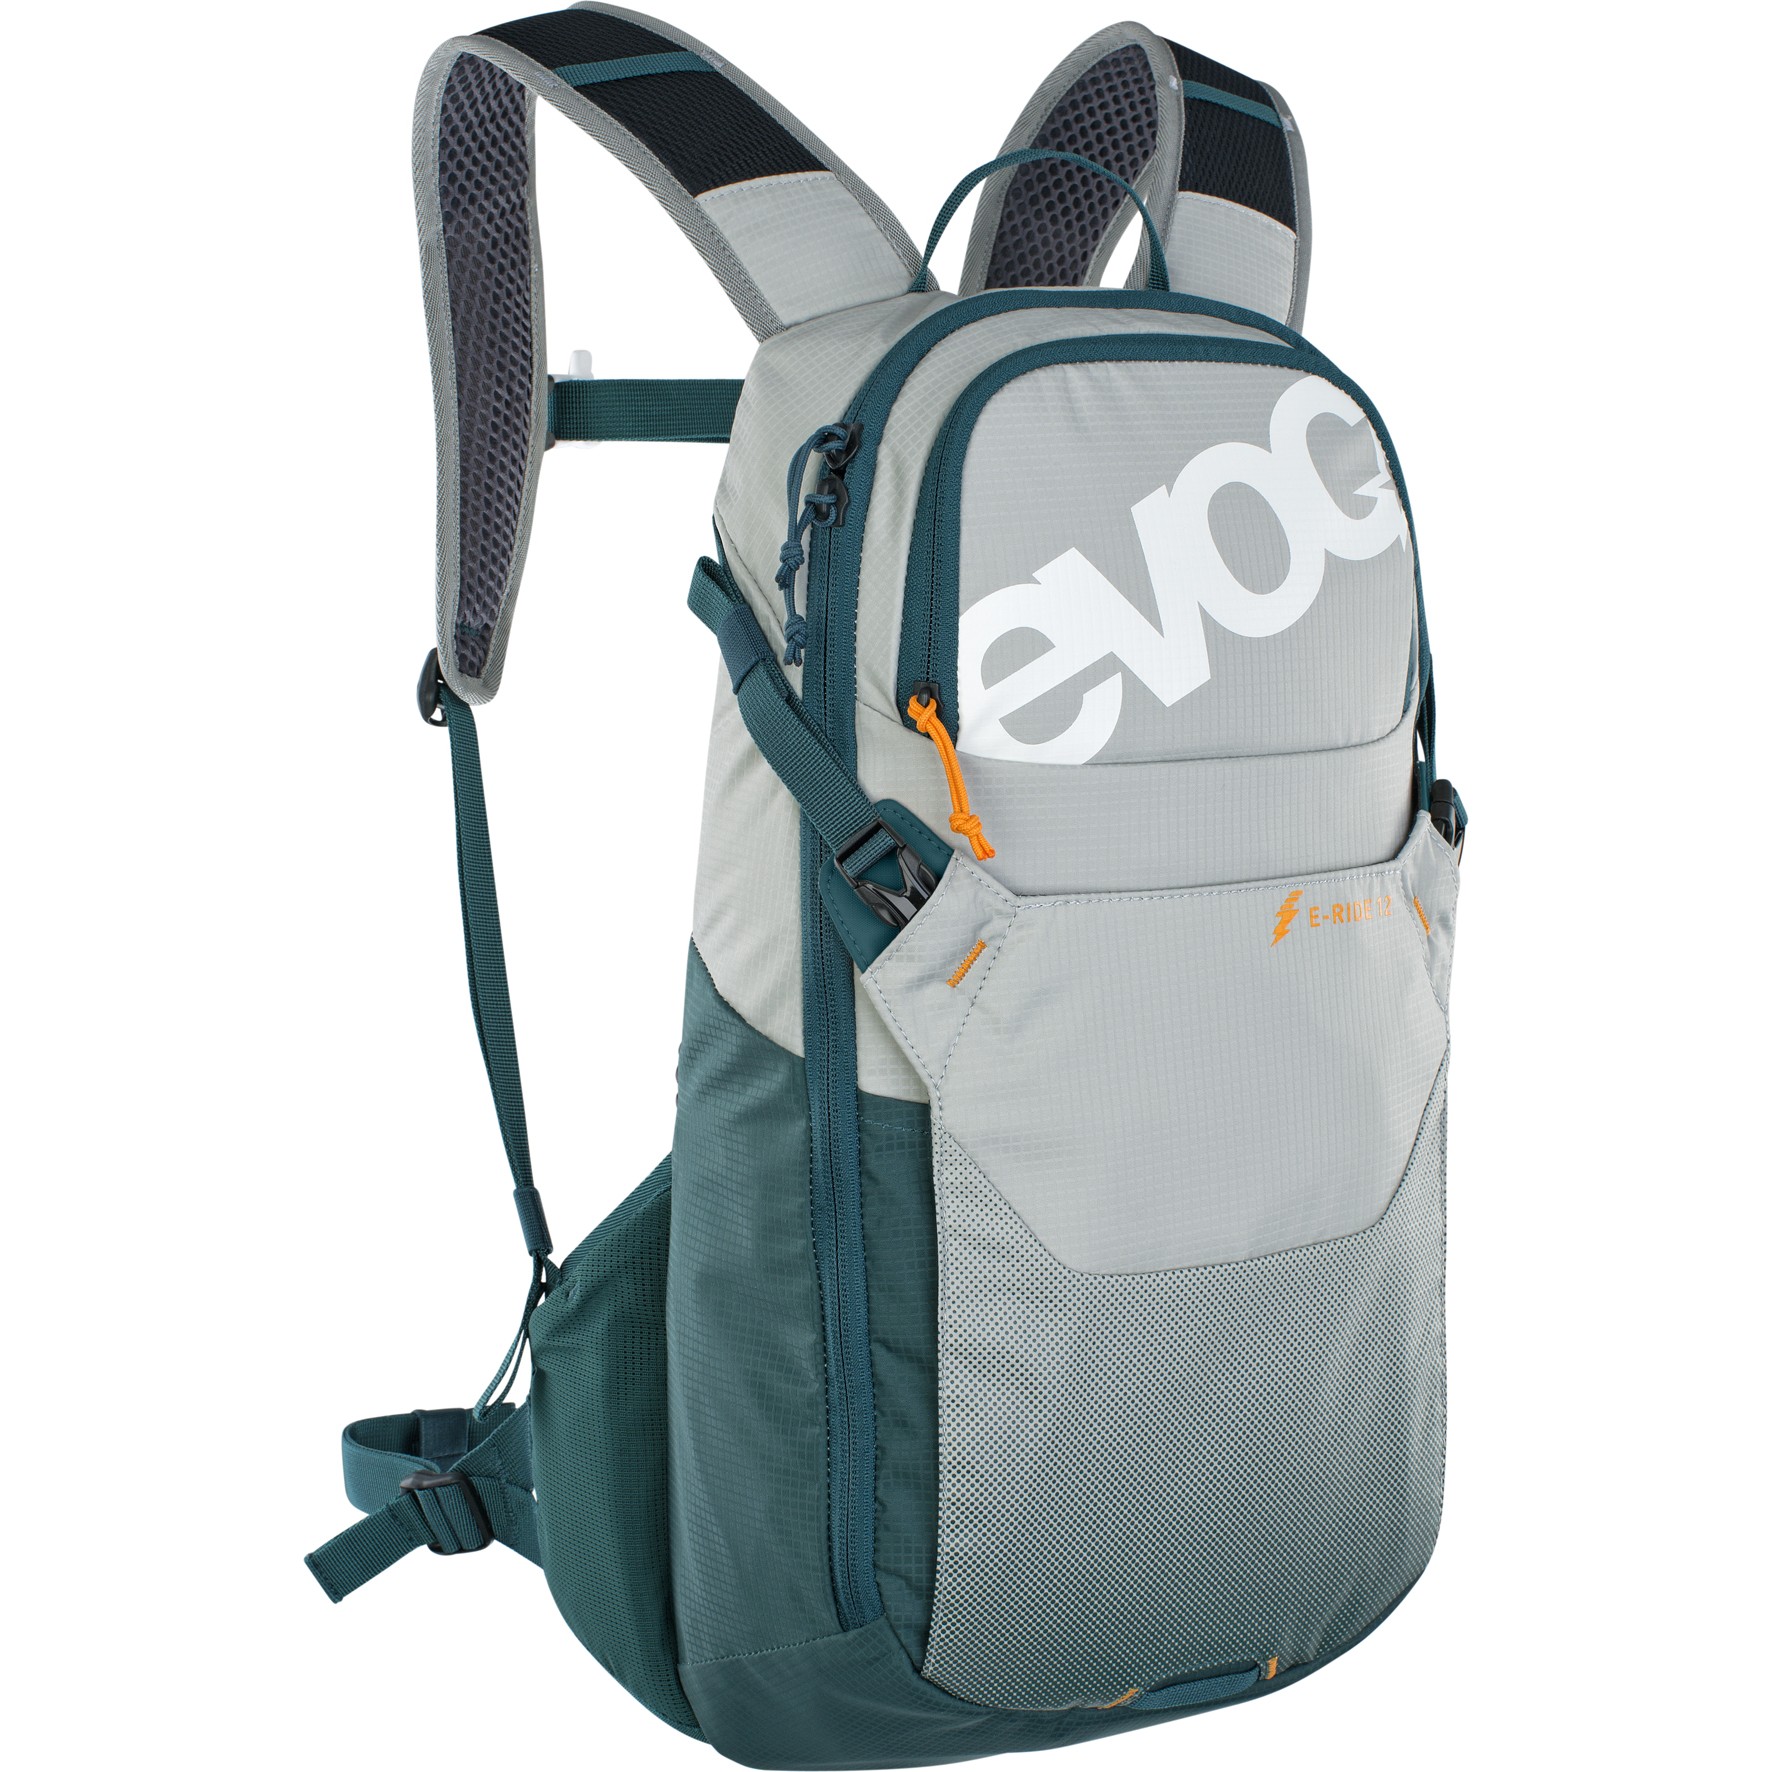 Productfoto van EVOC E-Ride 12L Backpack - Stone/Petrol